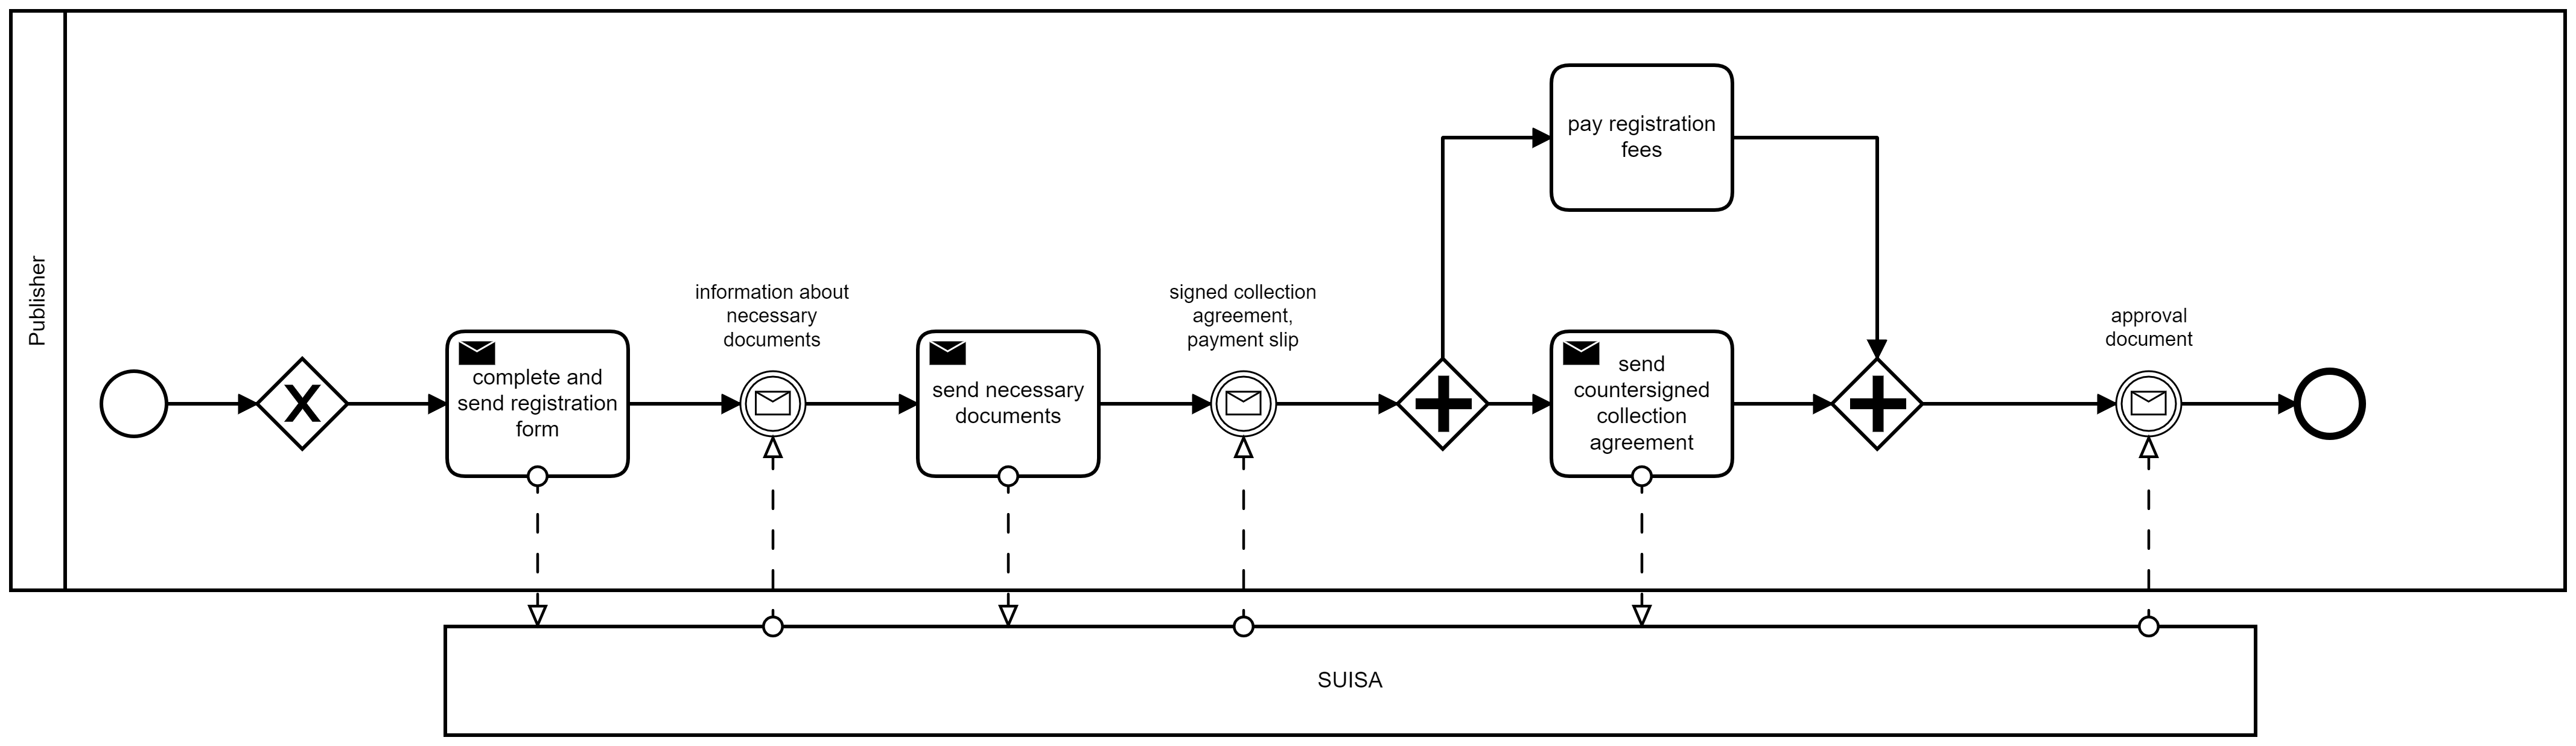 SUISA registration process